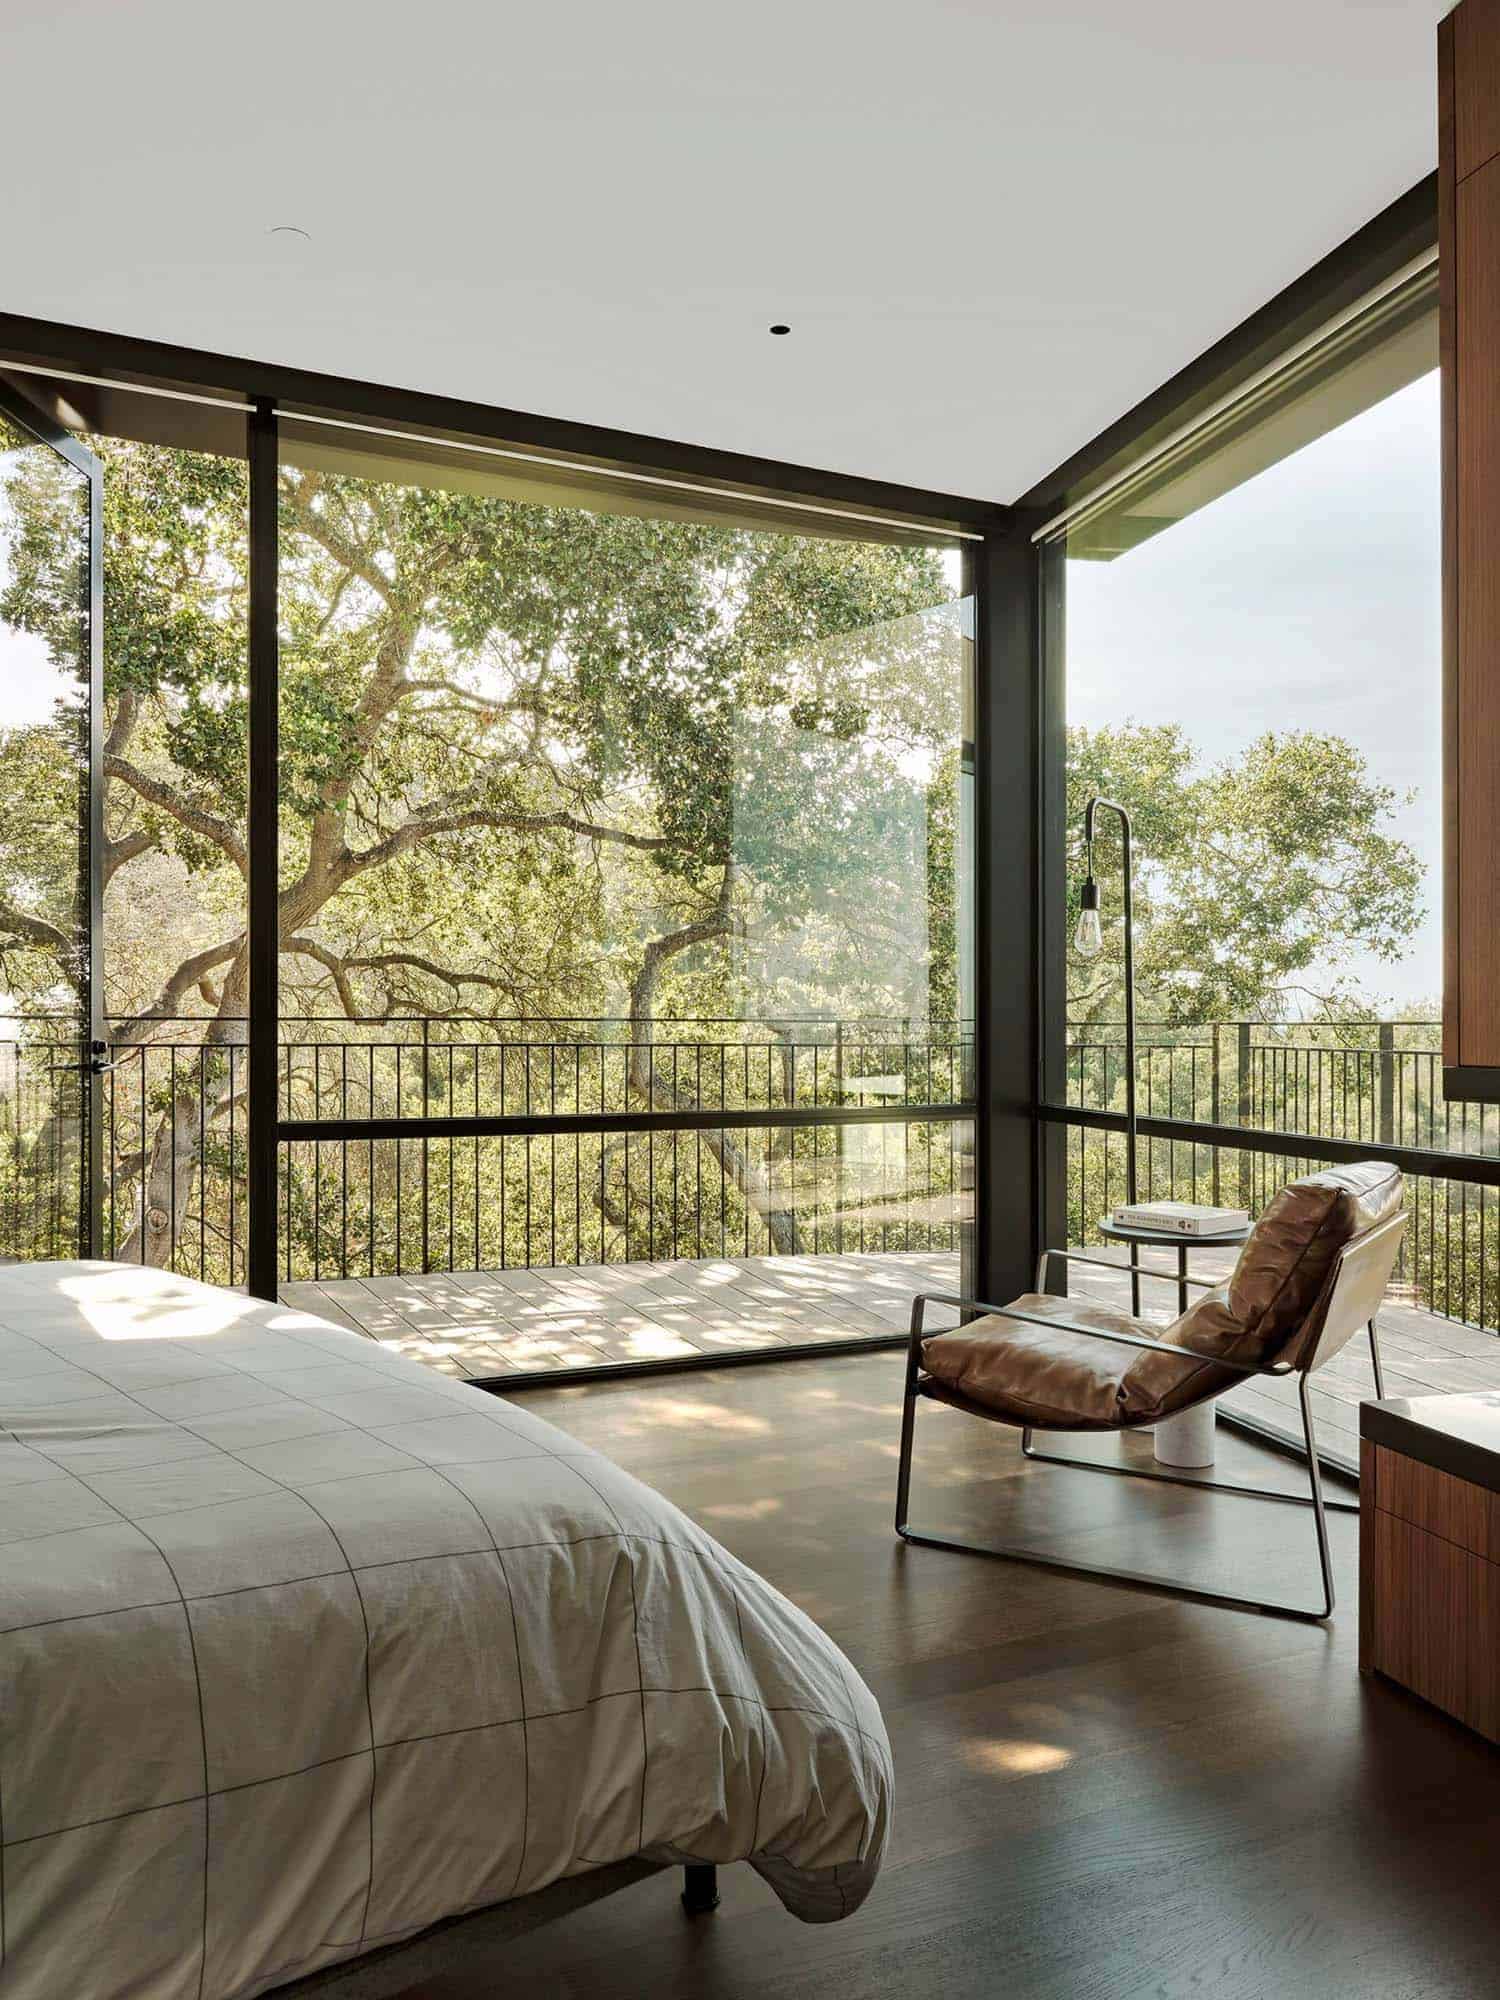 minimalist bedroom with large windows and tree views